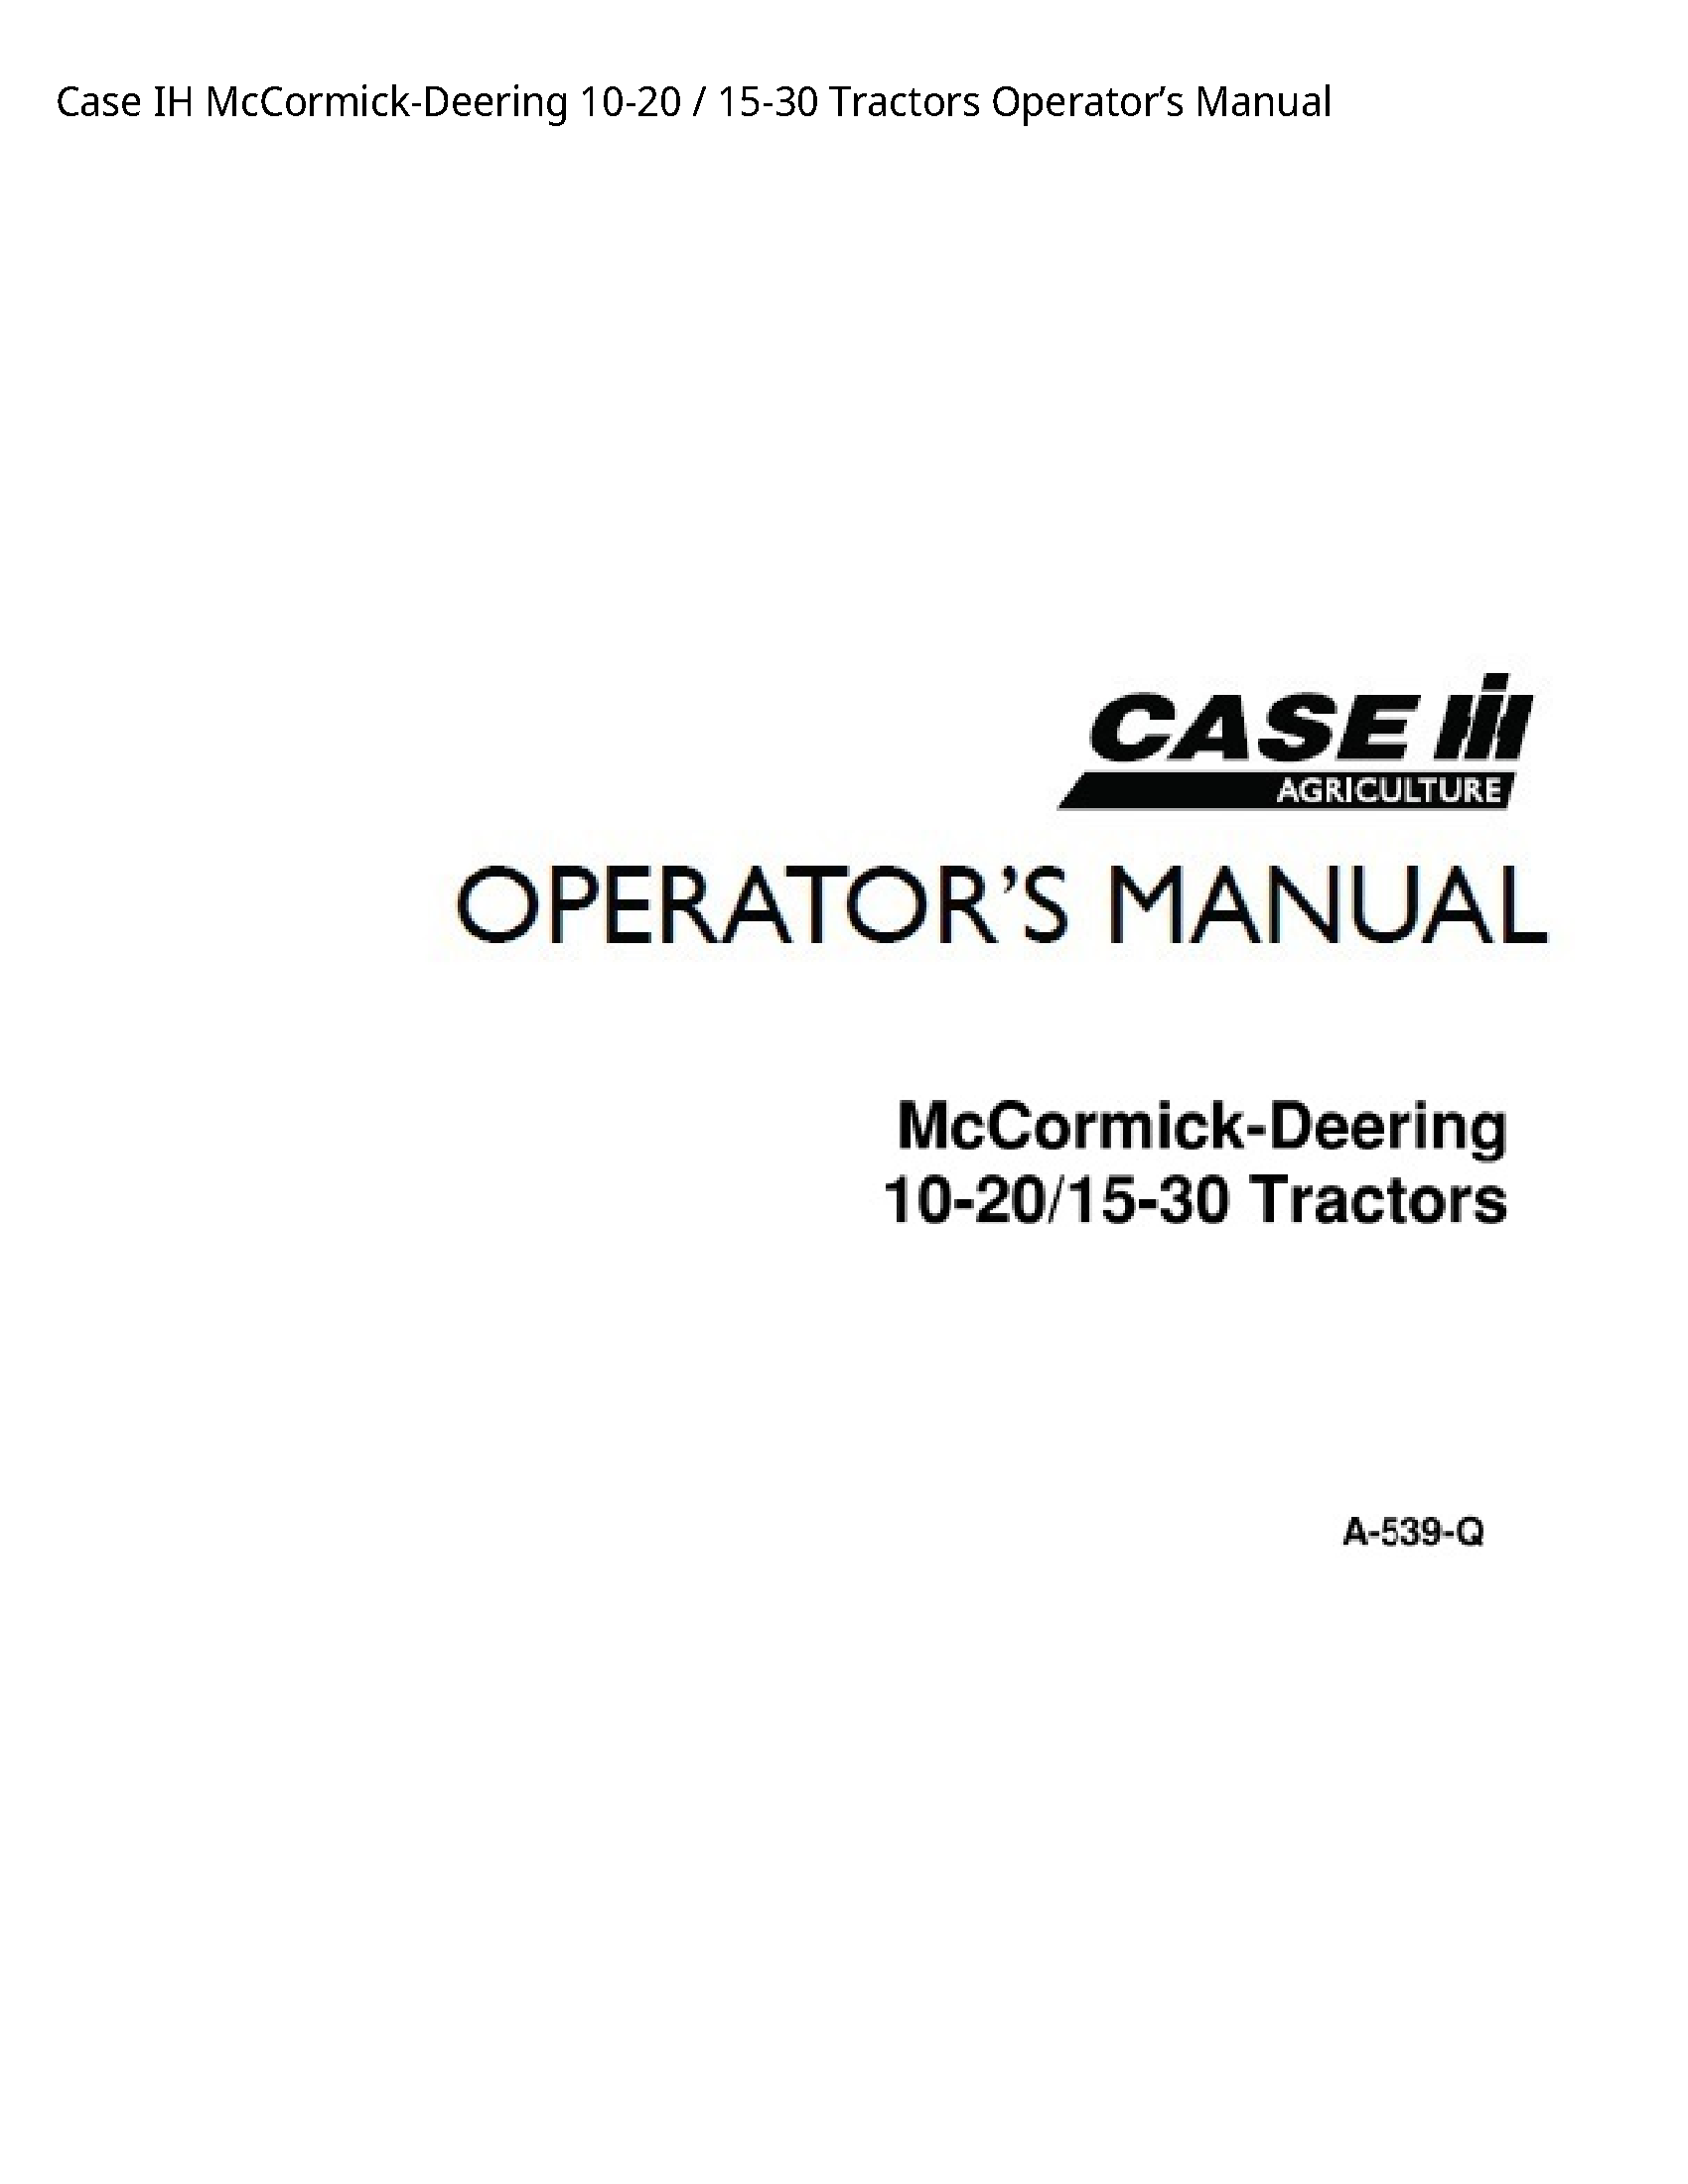 Case/Case IH 10-20 IH McCormick-Deering Tractors Operator’s manual